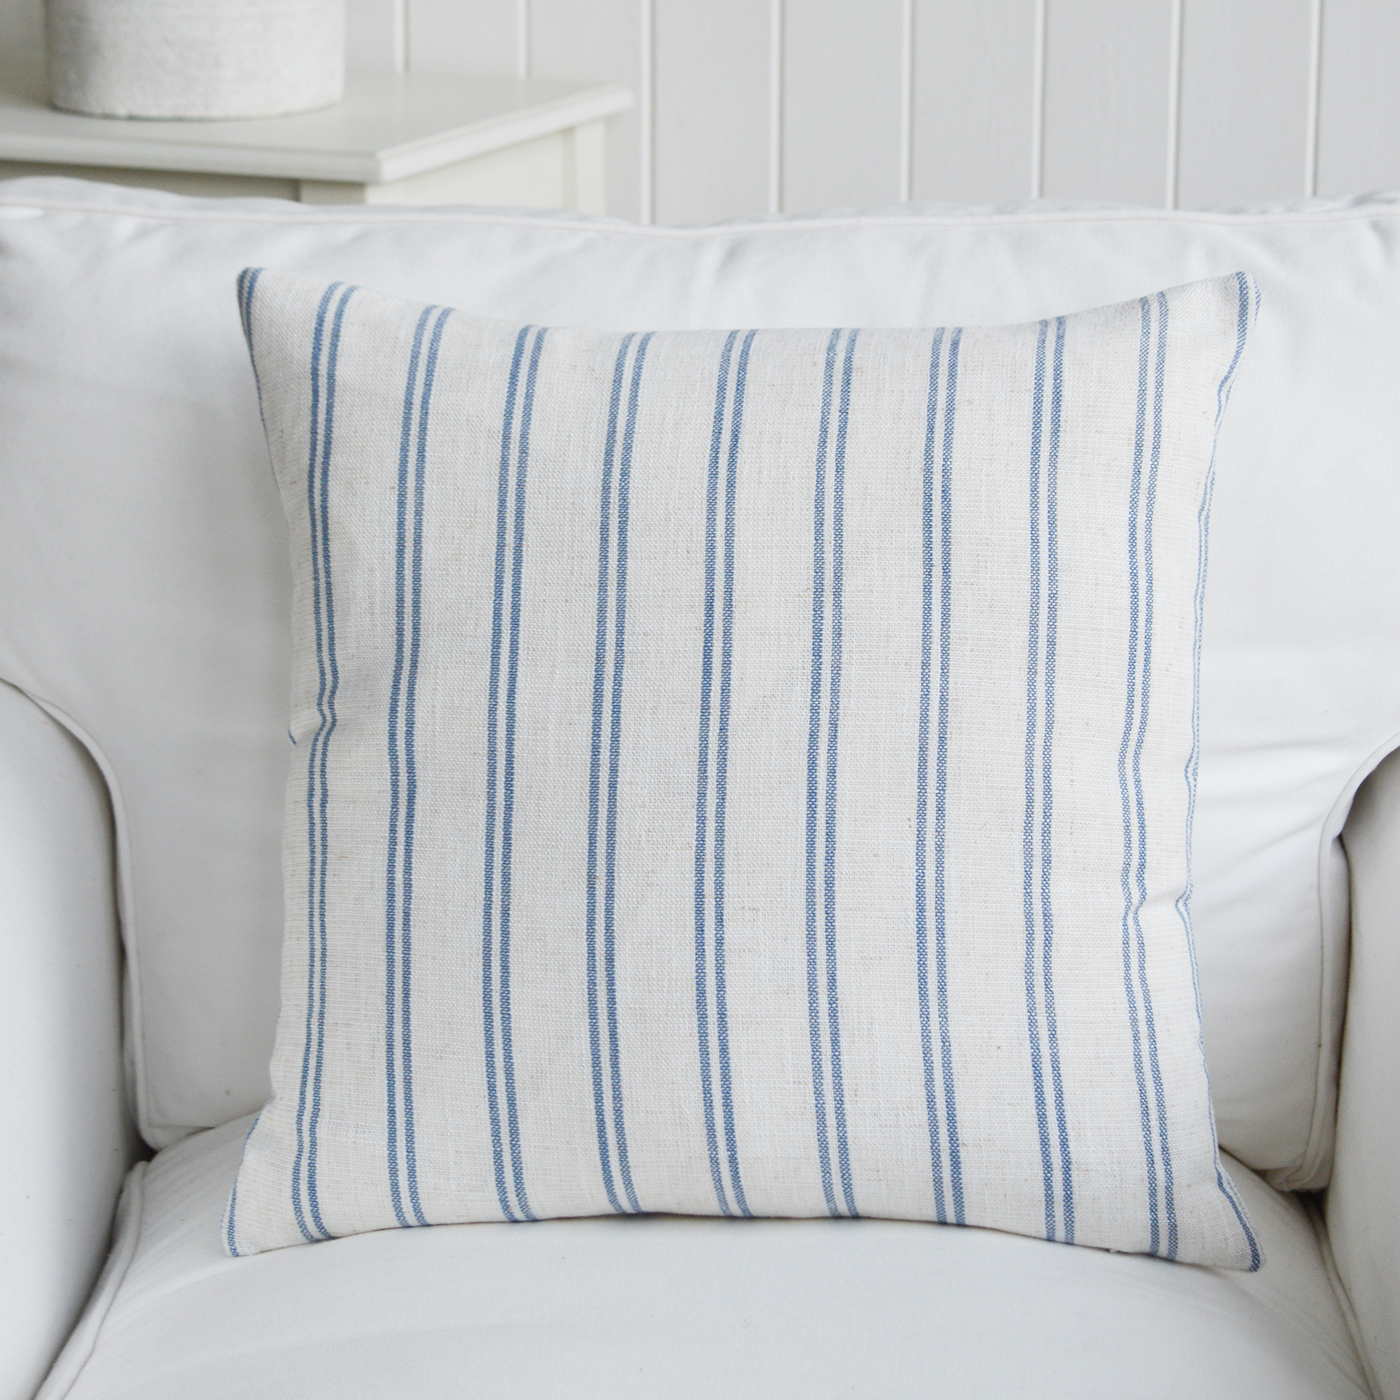 Coastal Hamptons cushions for the home. Harrison Blue and White Stripe Cushion Cover